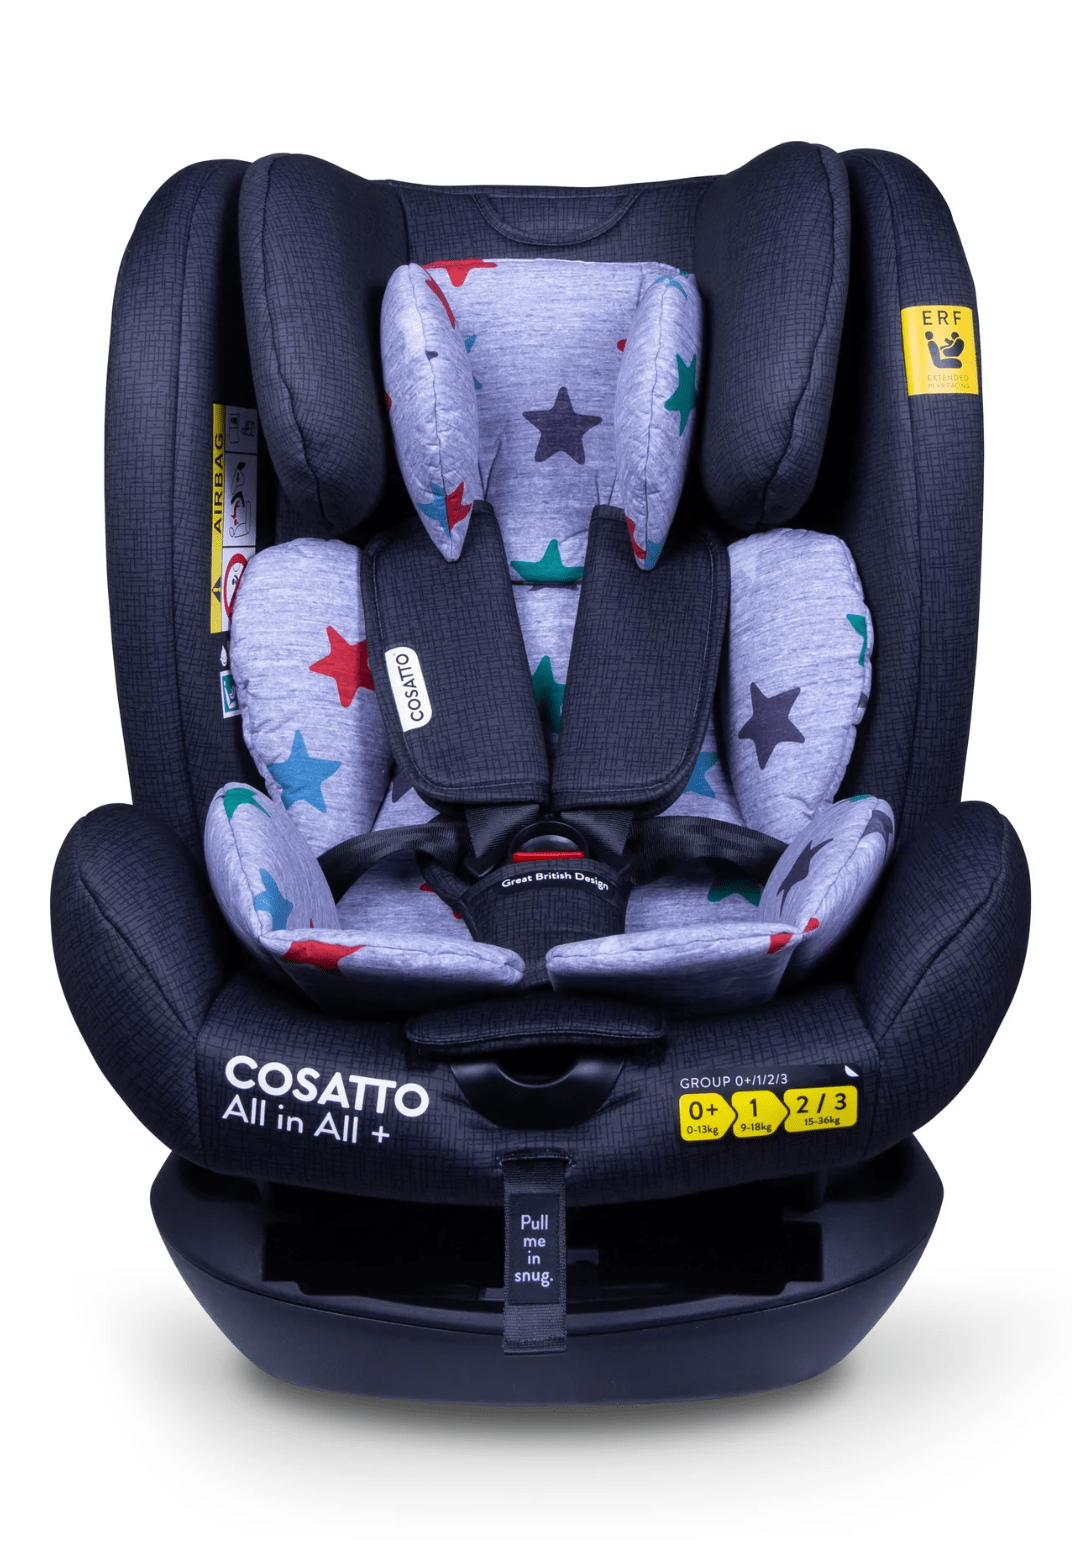 Cosatto Car Seats & Bases Grey Mega Stars Cosatto All In All + Group 0+123 Car Seat - Direct Delivery